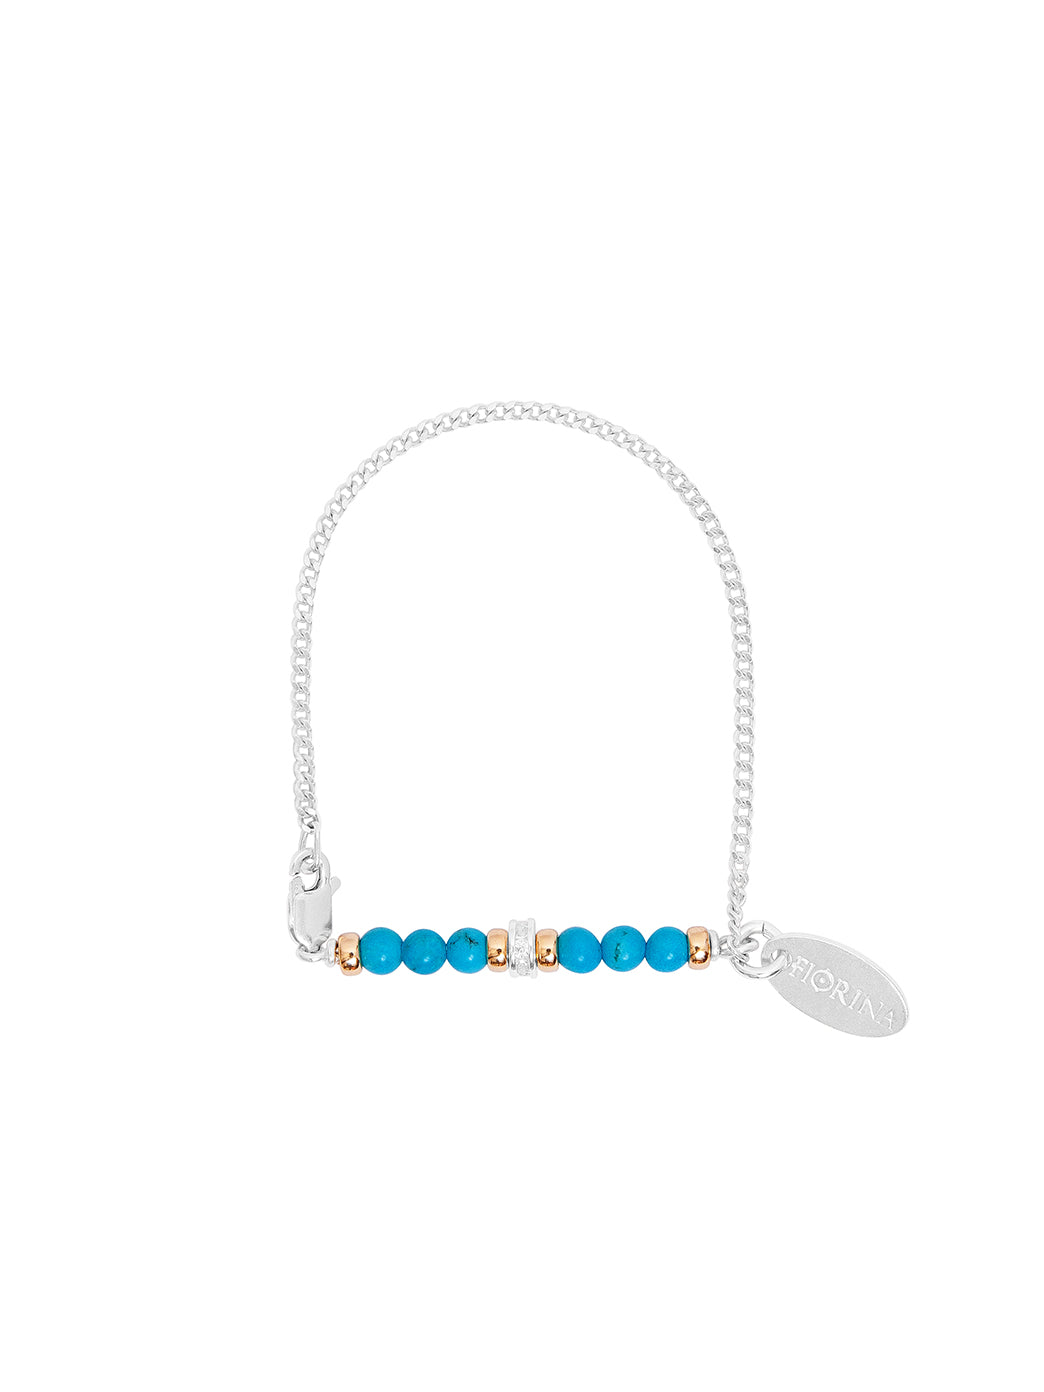 Fiorina Jewellery Romance Bracelet Turquoise